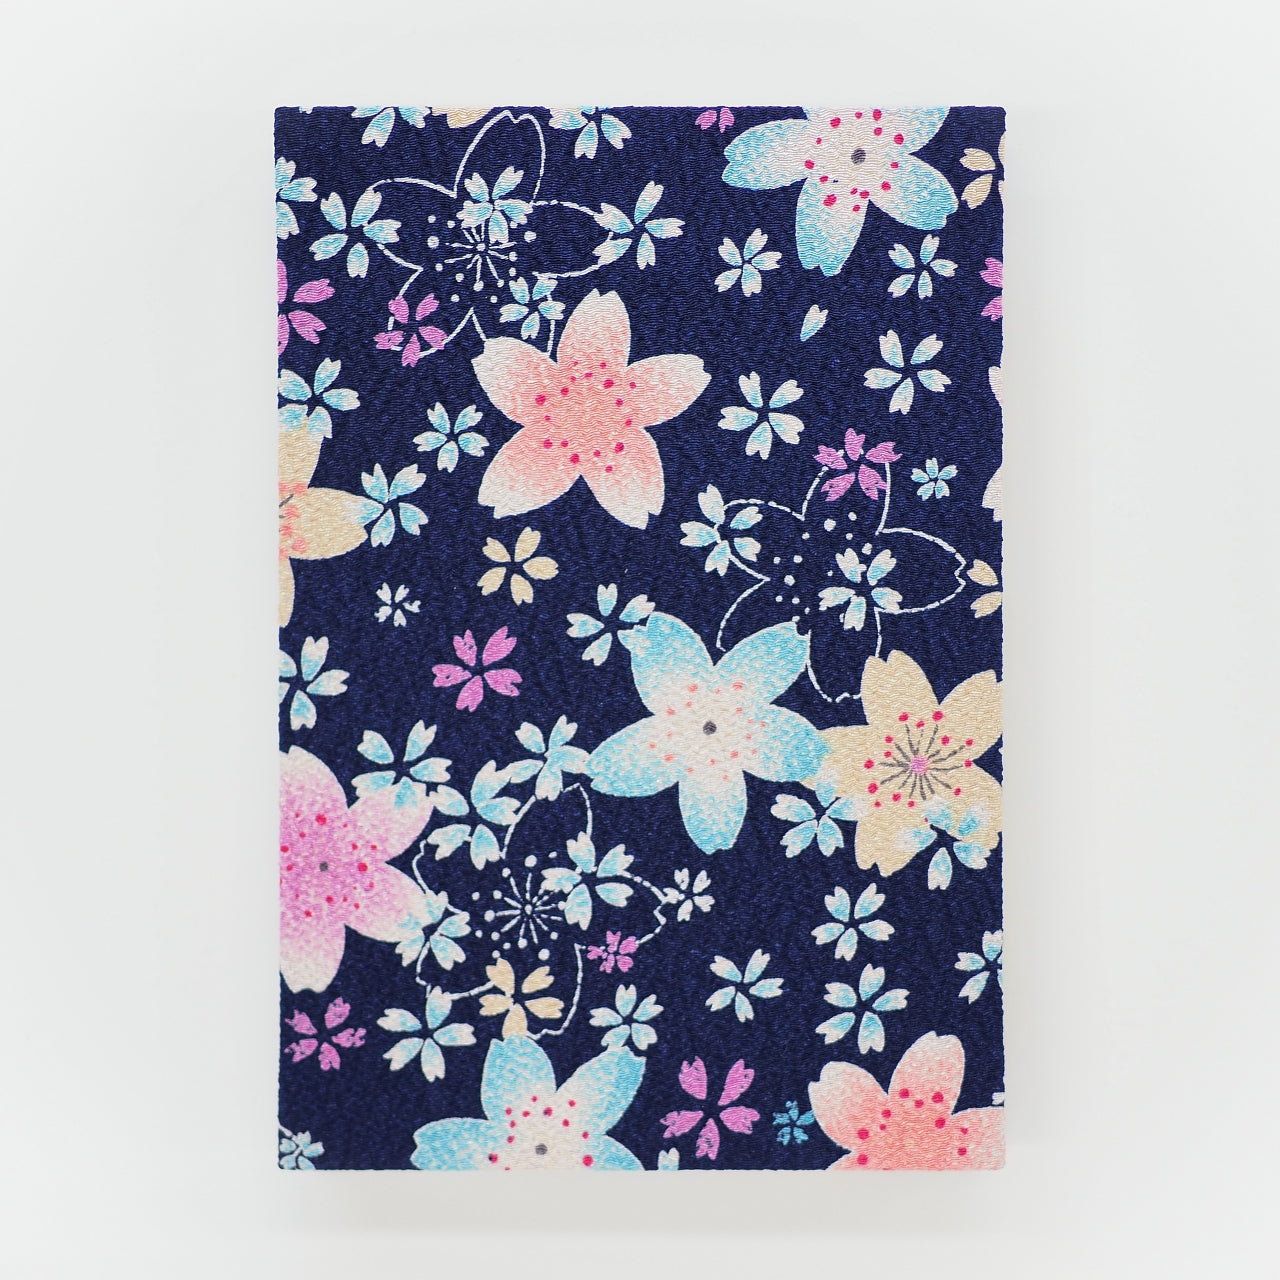 Goshuin book “Yamato Nadeshiko” Modern dark blue cherry blossoms